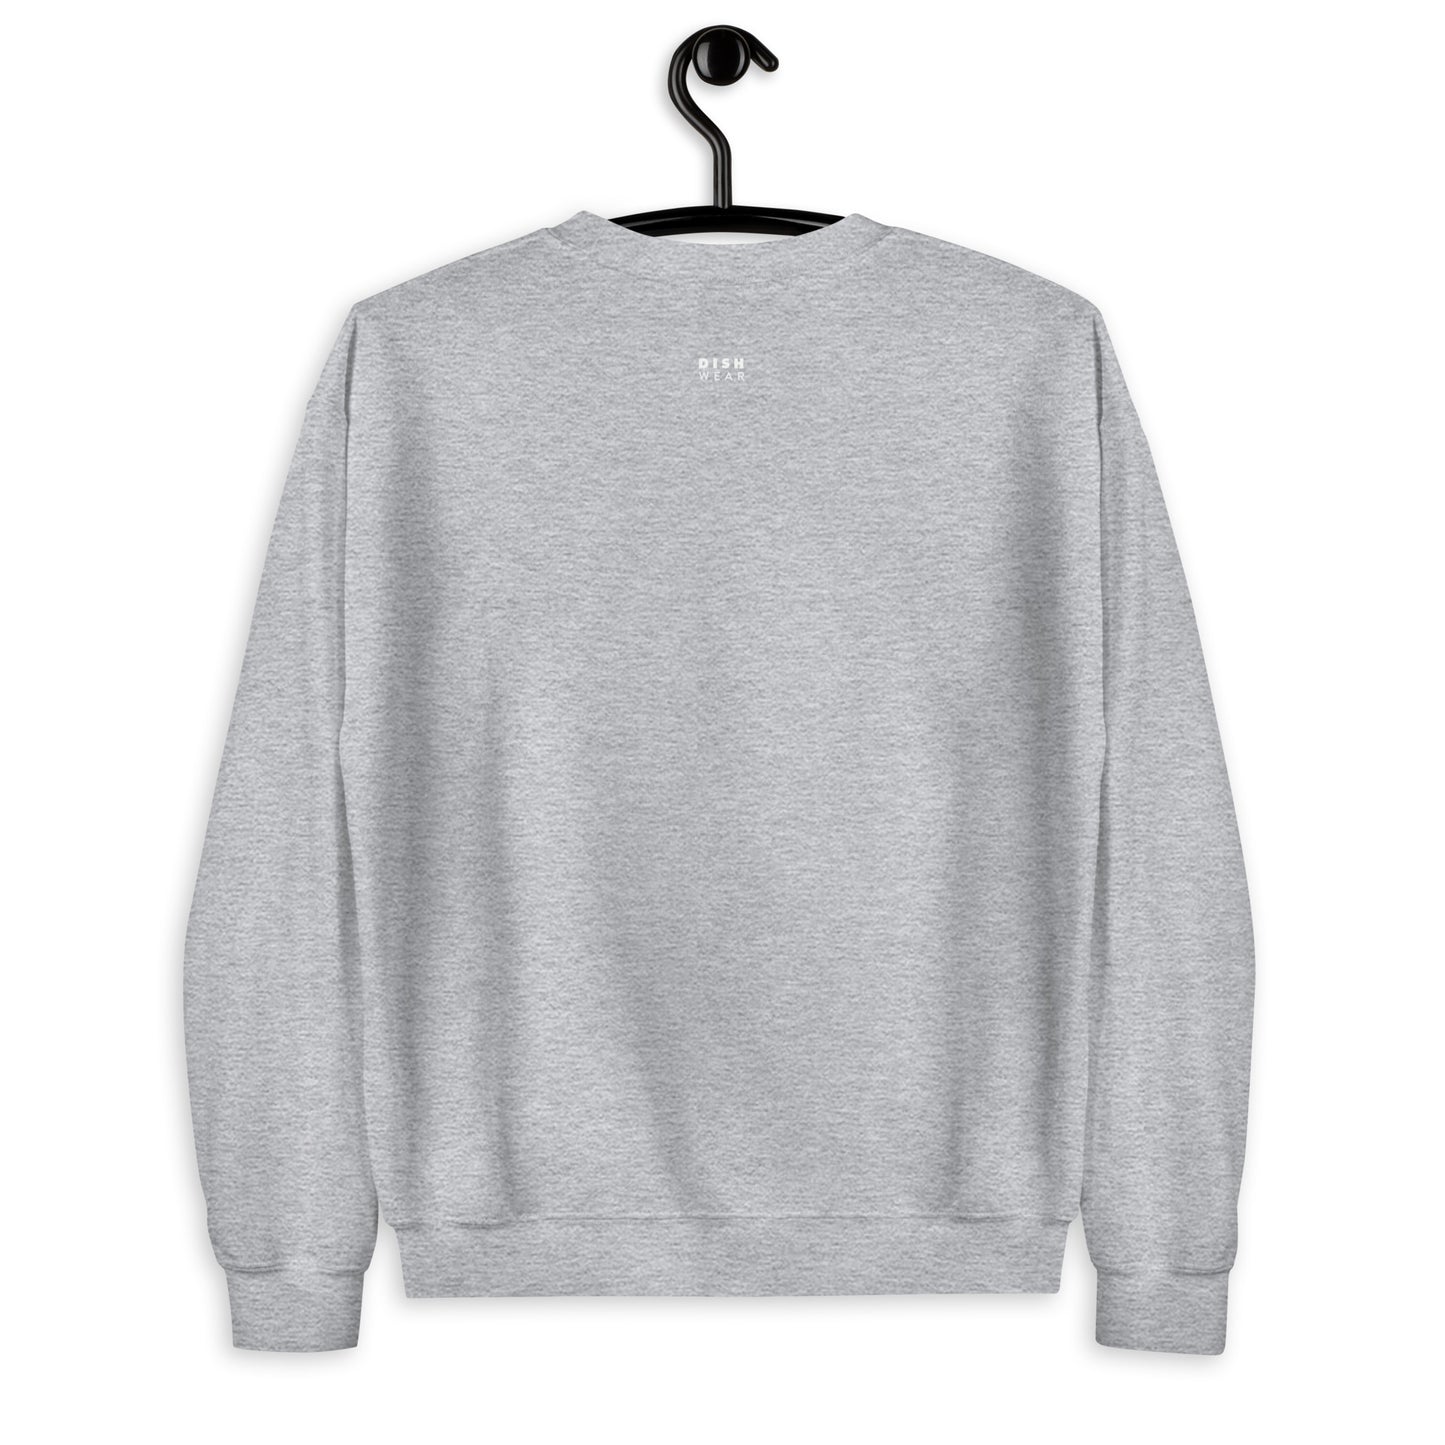 Baguette Sweatshirt - Straight Font